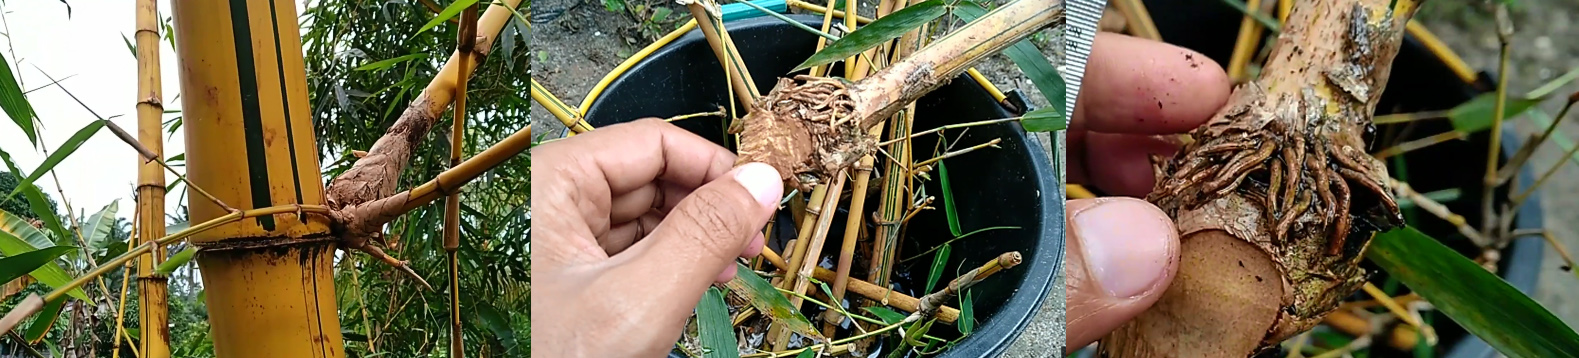  Cara Menanam Bambu Kuning  di Polybag KampusTani Com